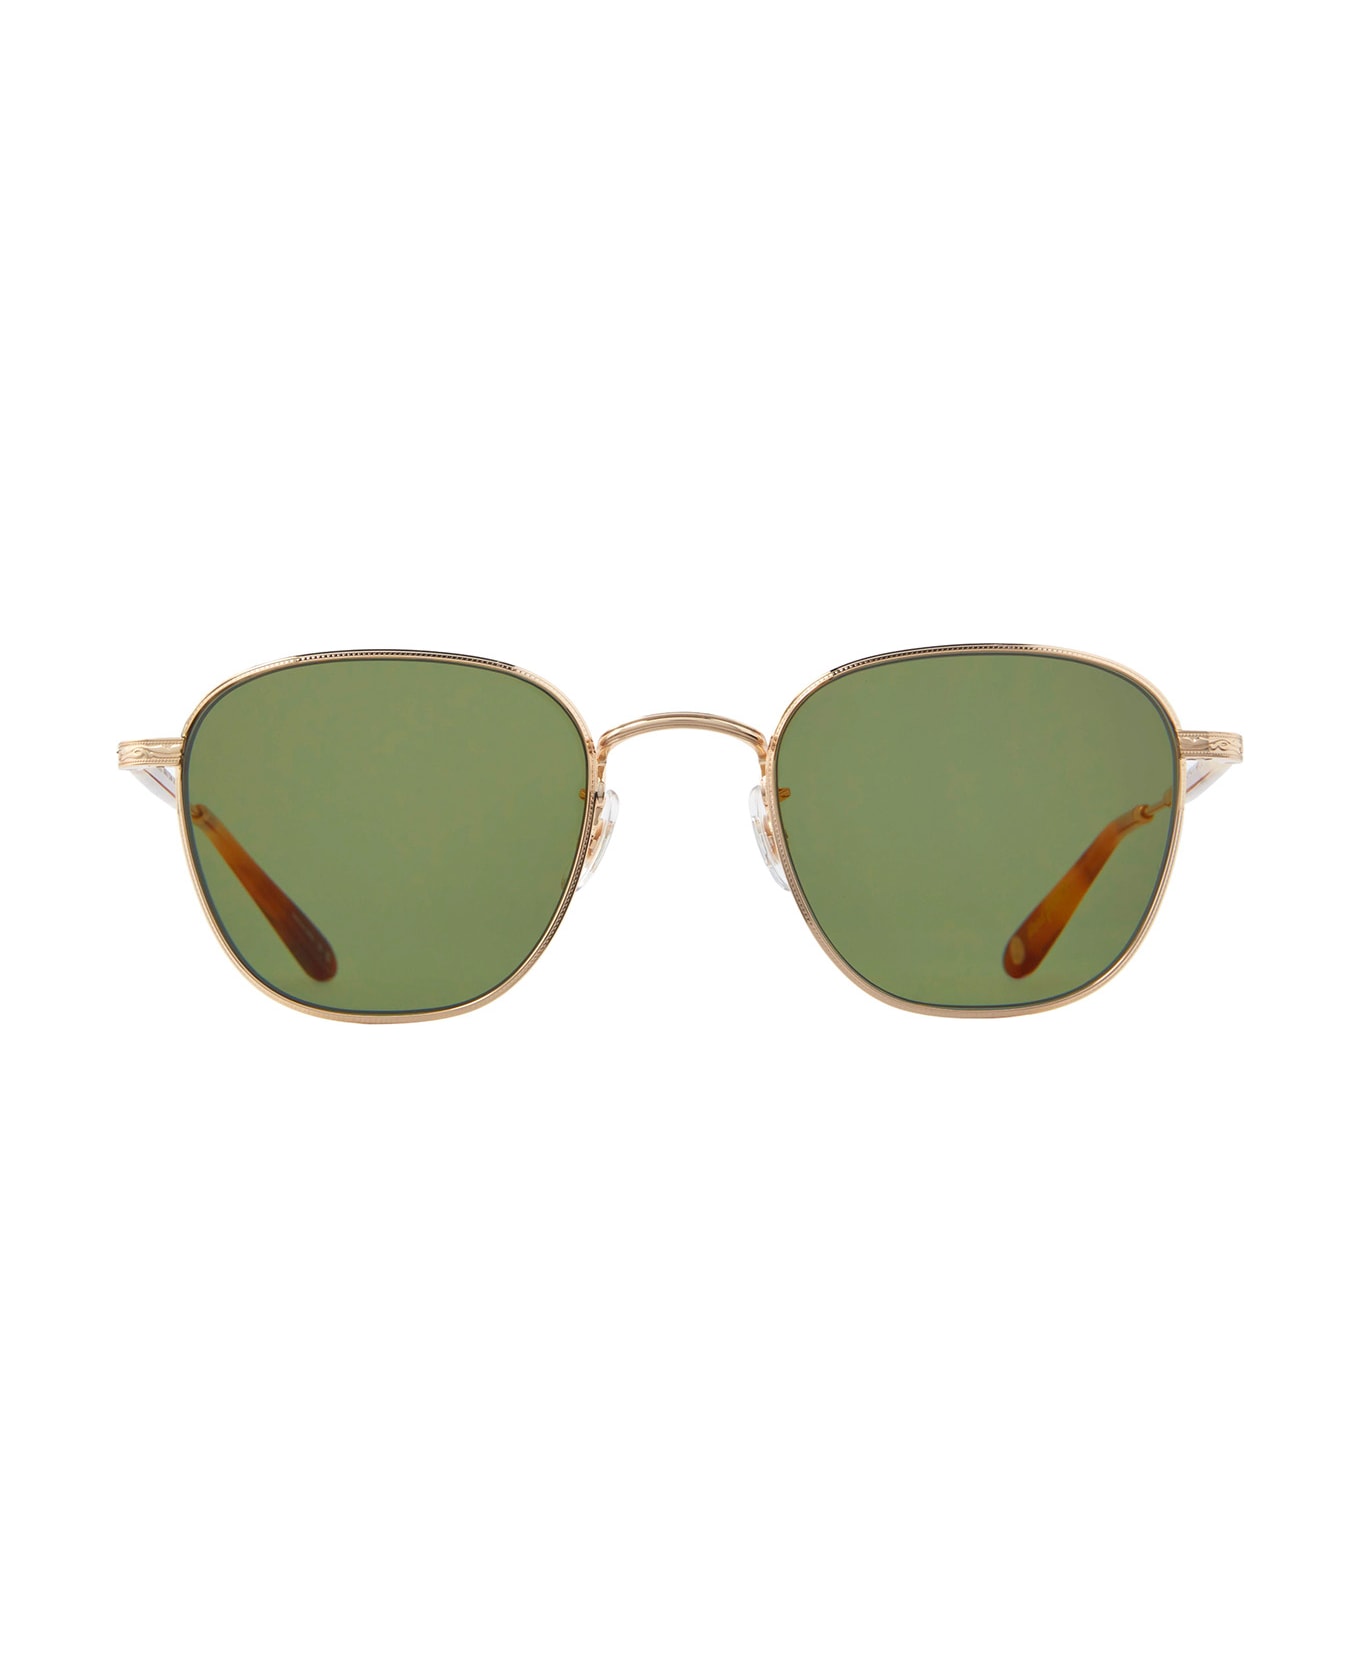 Garrett Leight World Sun Gold-ember Tortoise/semi-flat Green Sunglasses - Gold-Ember Tortoise/Semi-Flat Green サングラス